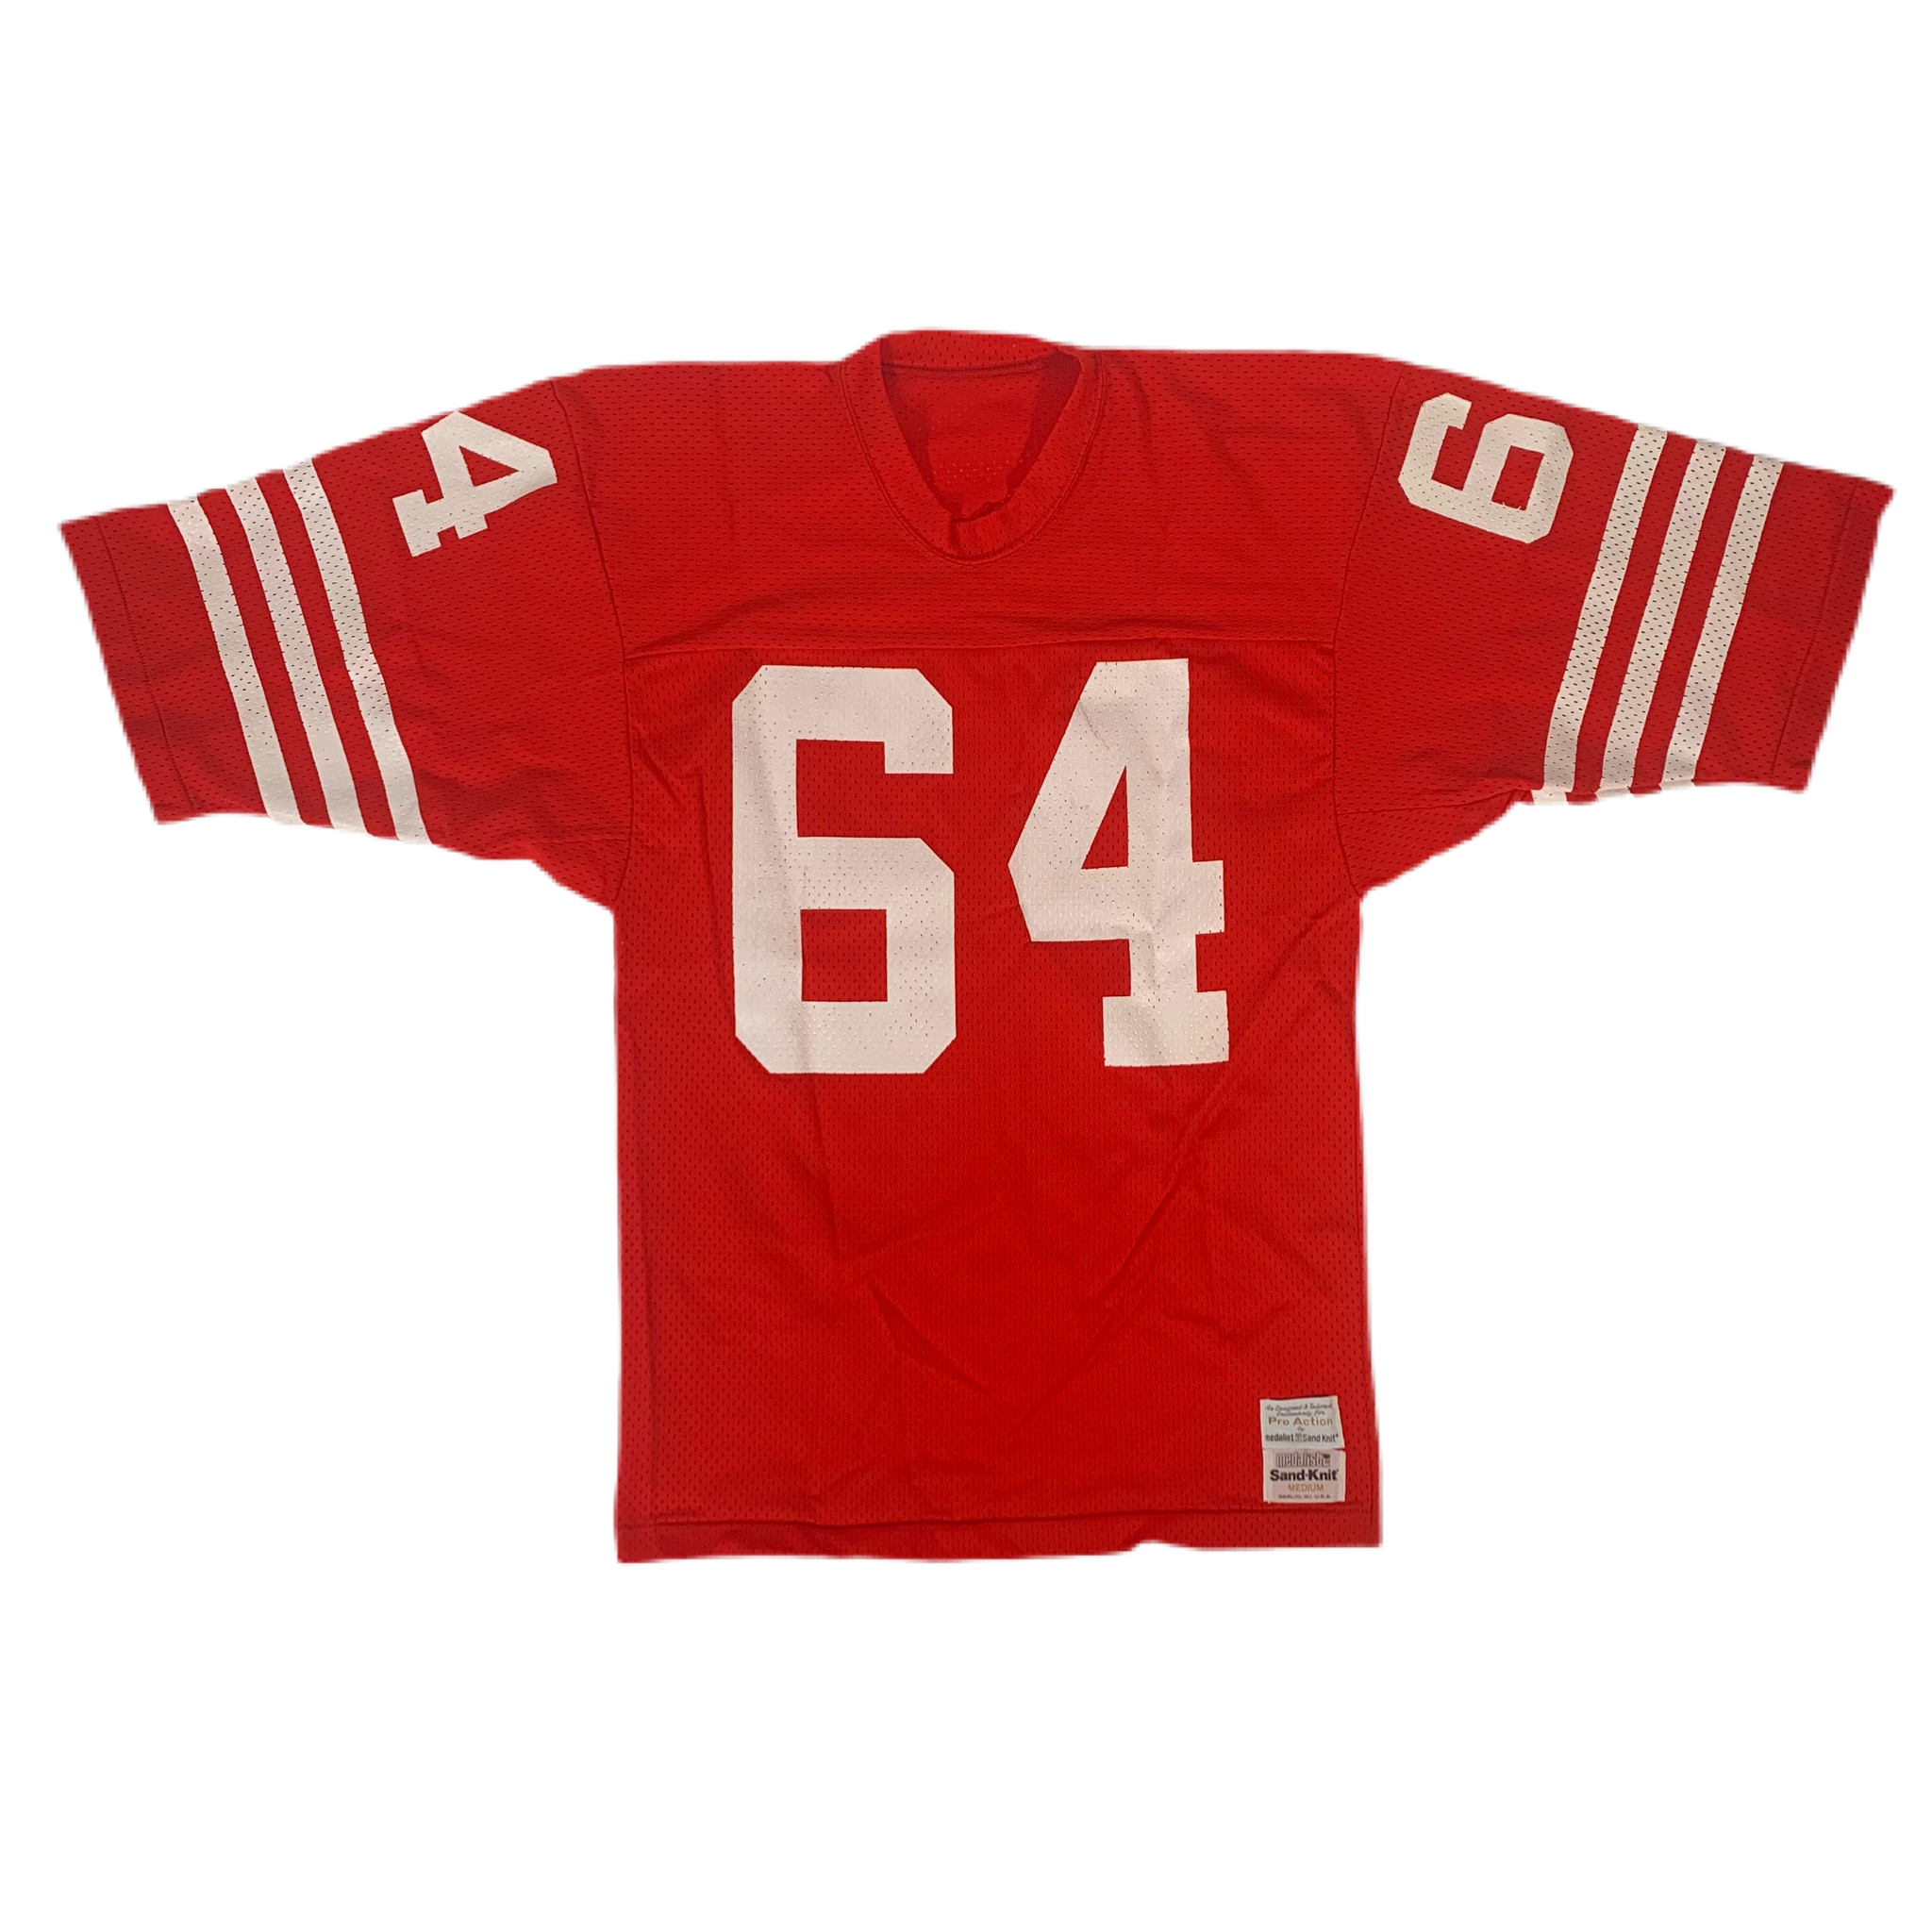 49ers vintage jersey